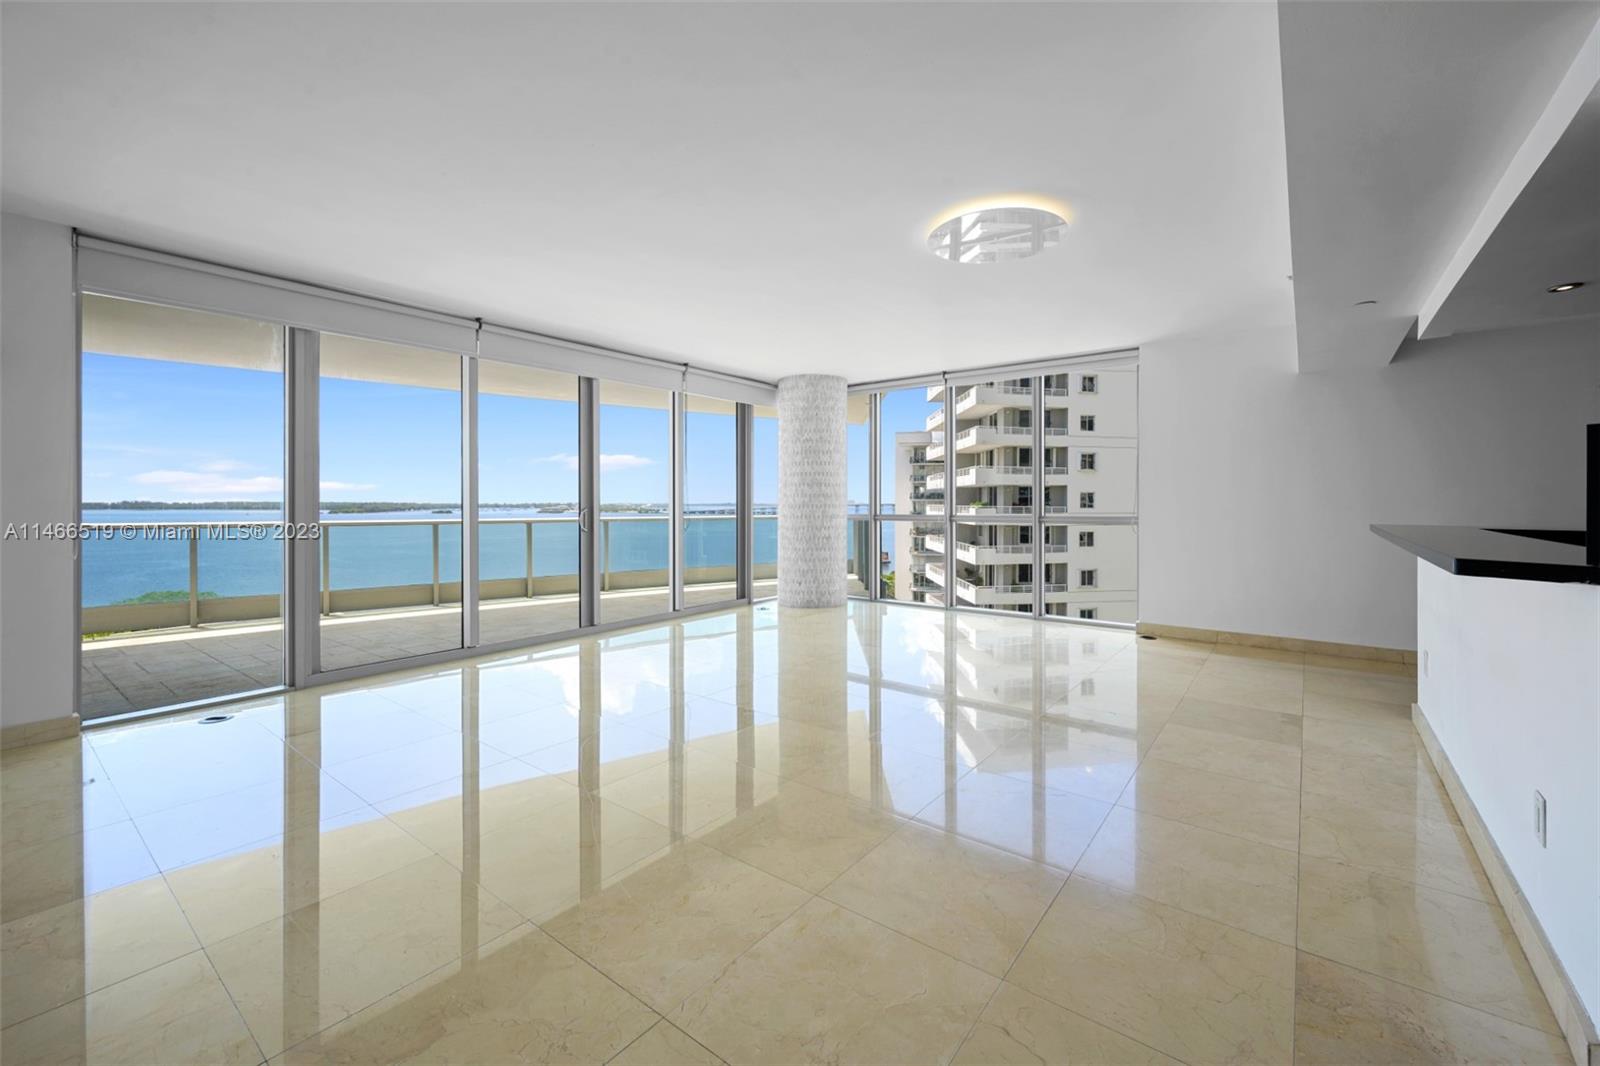 Property for Sale at 1331 Brickell Bay Dr 911, Miami, Broward County, Florida - Bedrooms: 2 
Bathrooms: 3  - $1,990,000